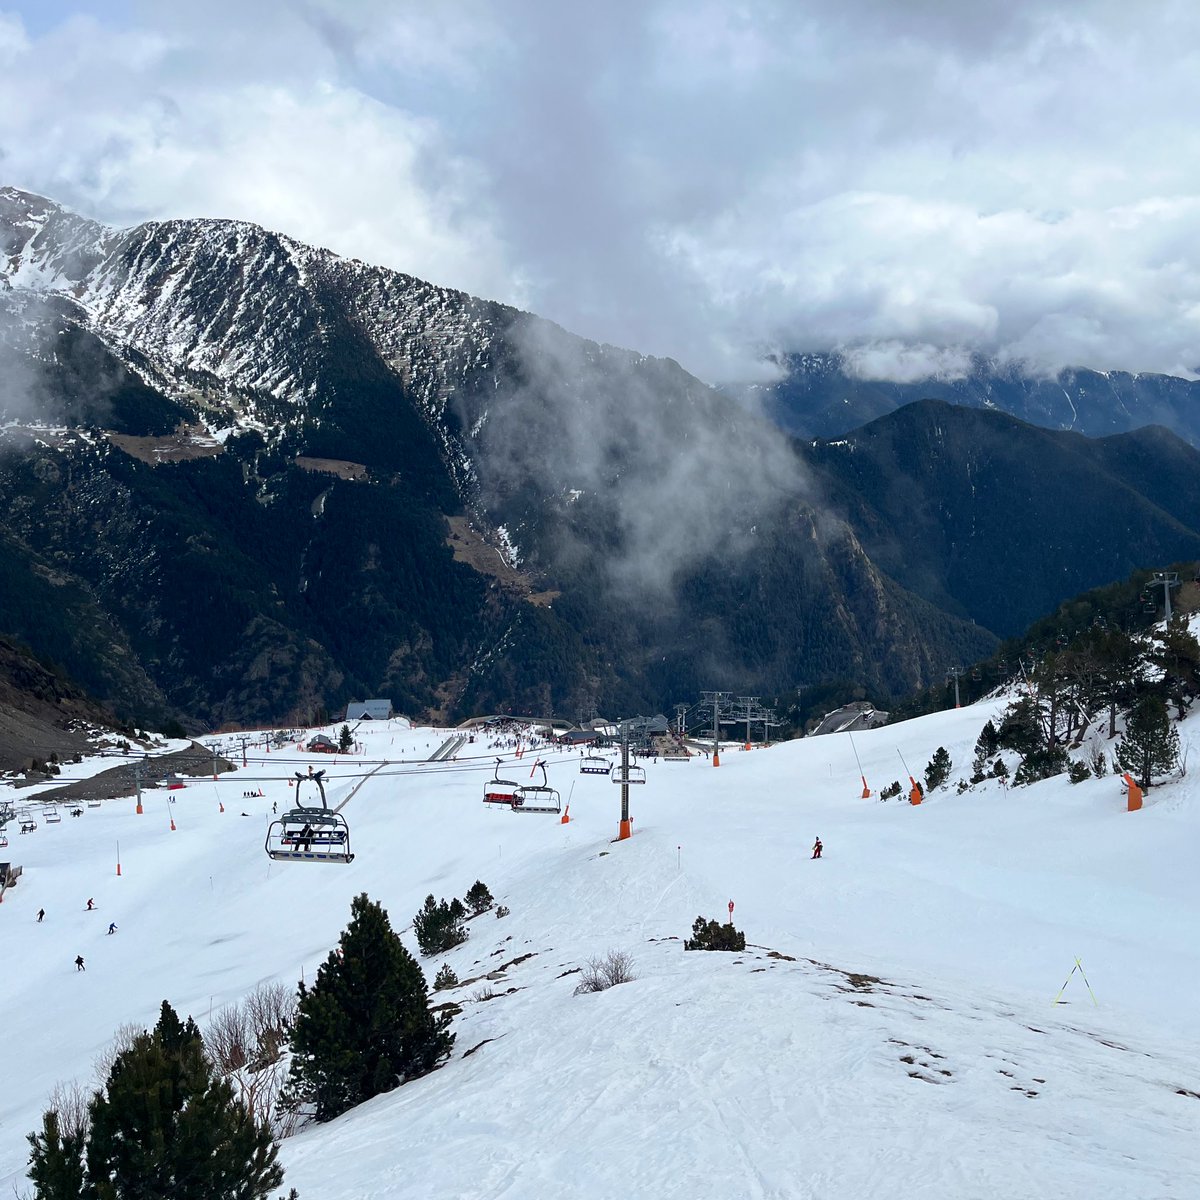 Great week had in Andorra exploring the slopes 🇦🇩 #skiing #aprèsski #piste #arinsal #pal #vallnord #andorra